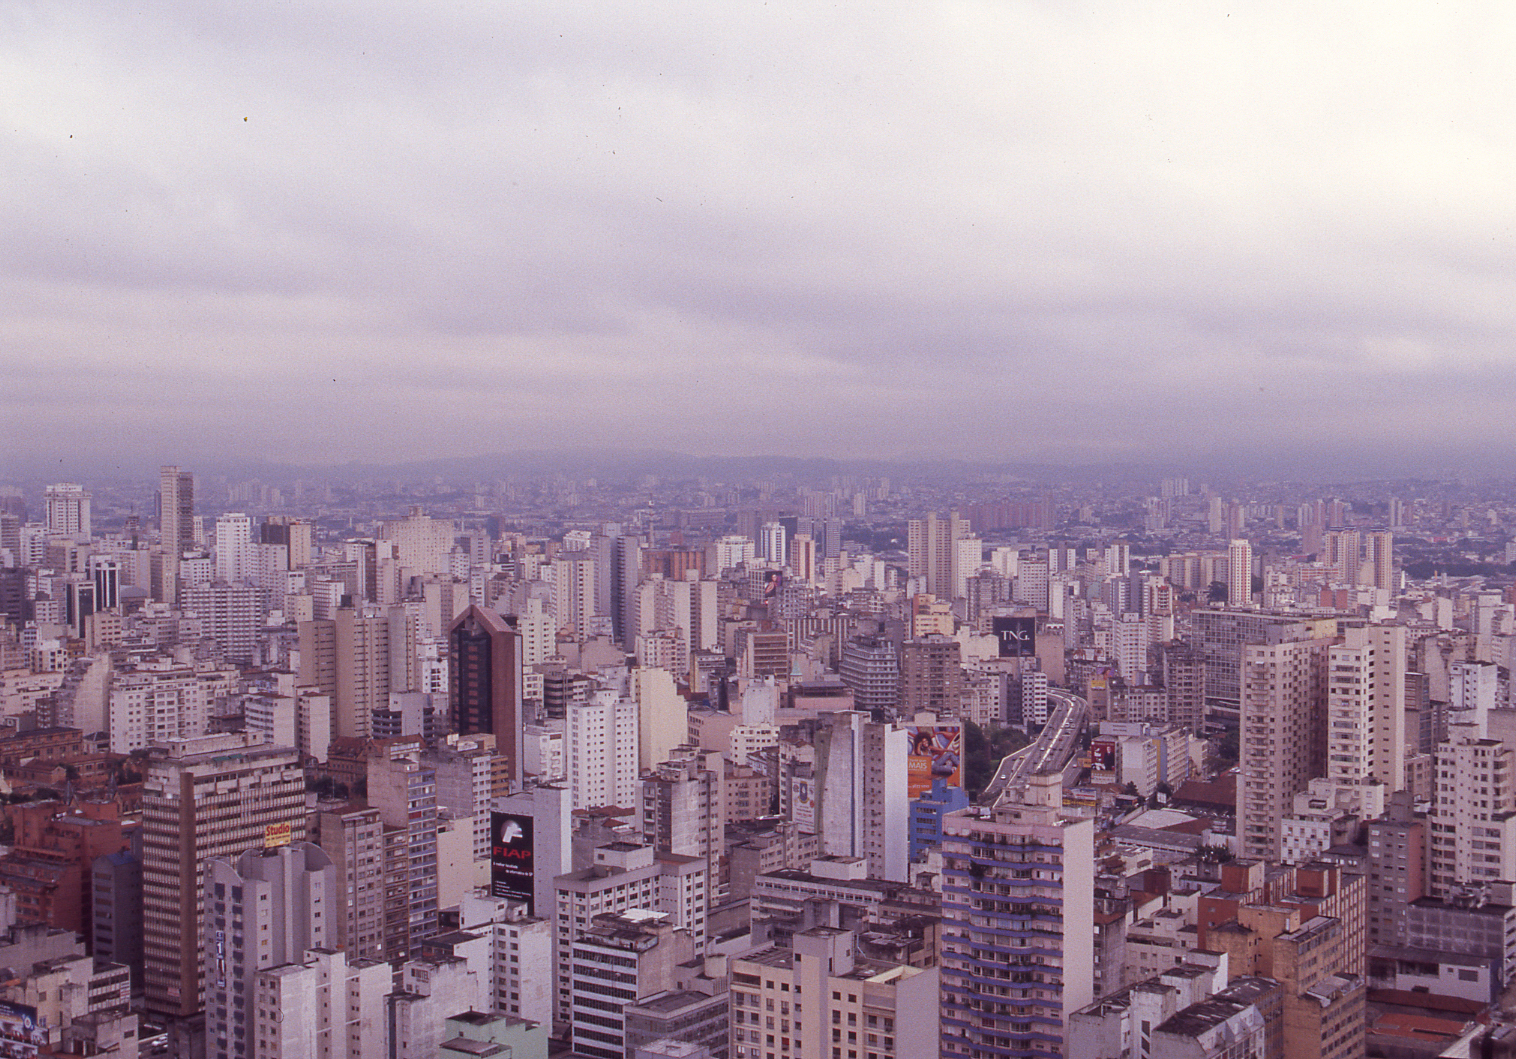 Sao Paolo (Brazil, 2004)